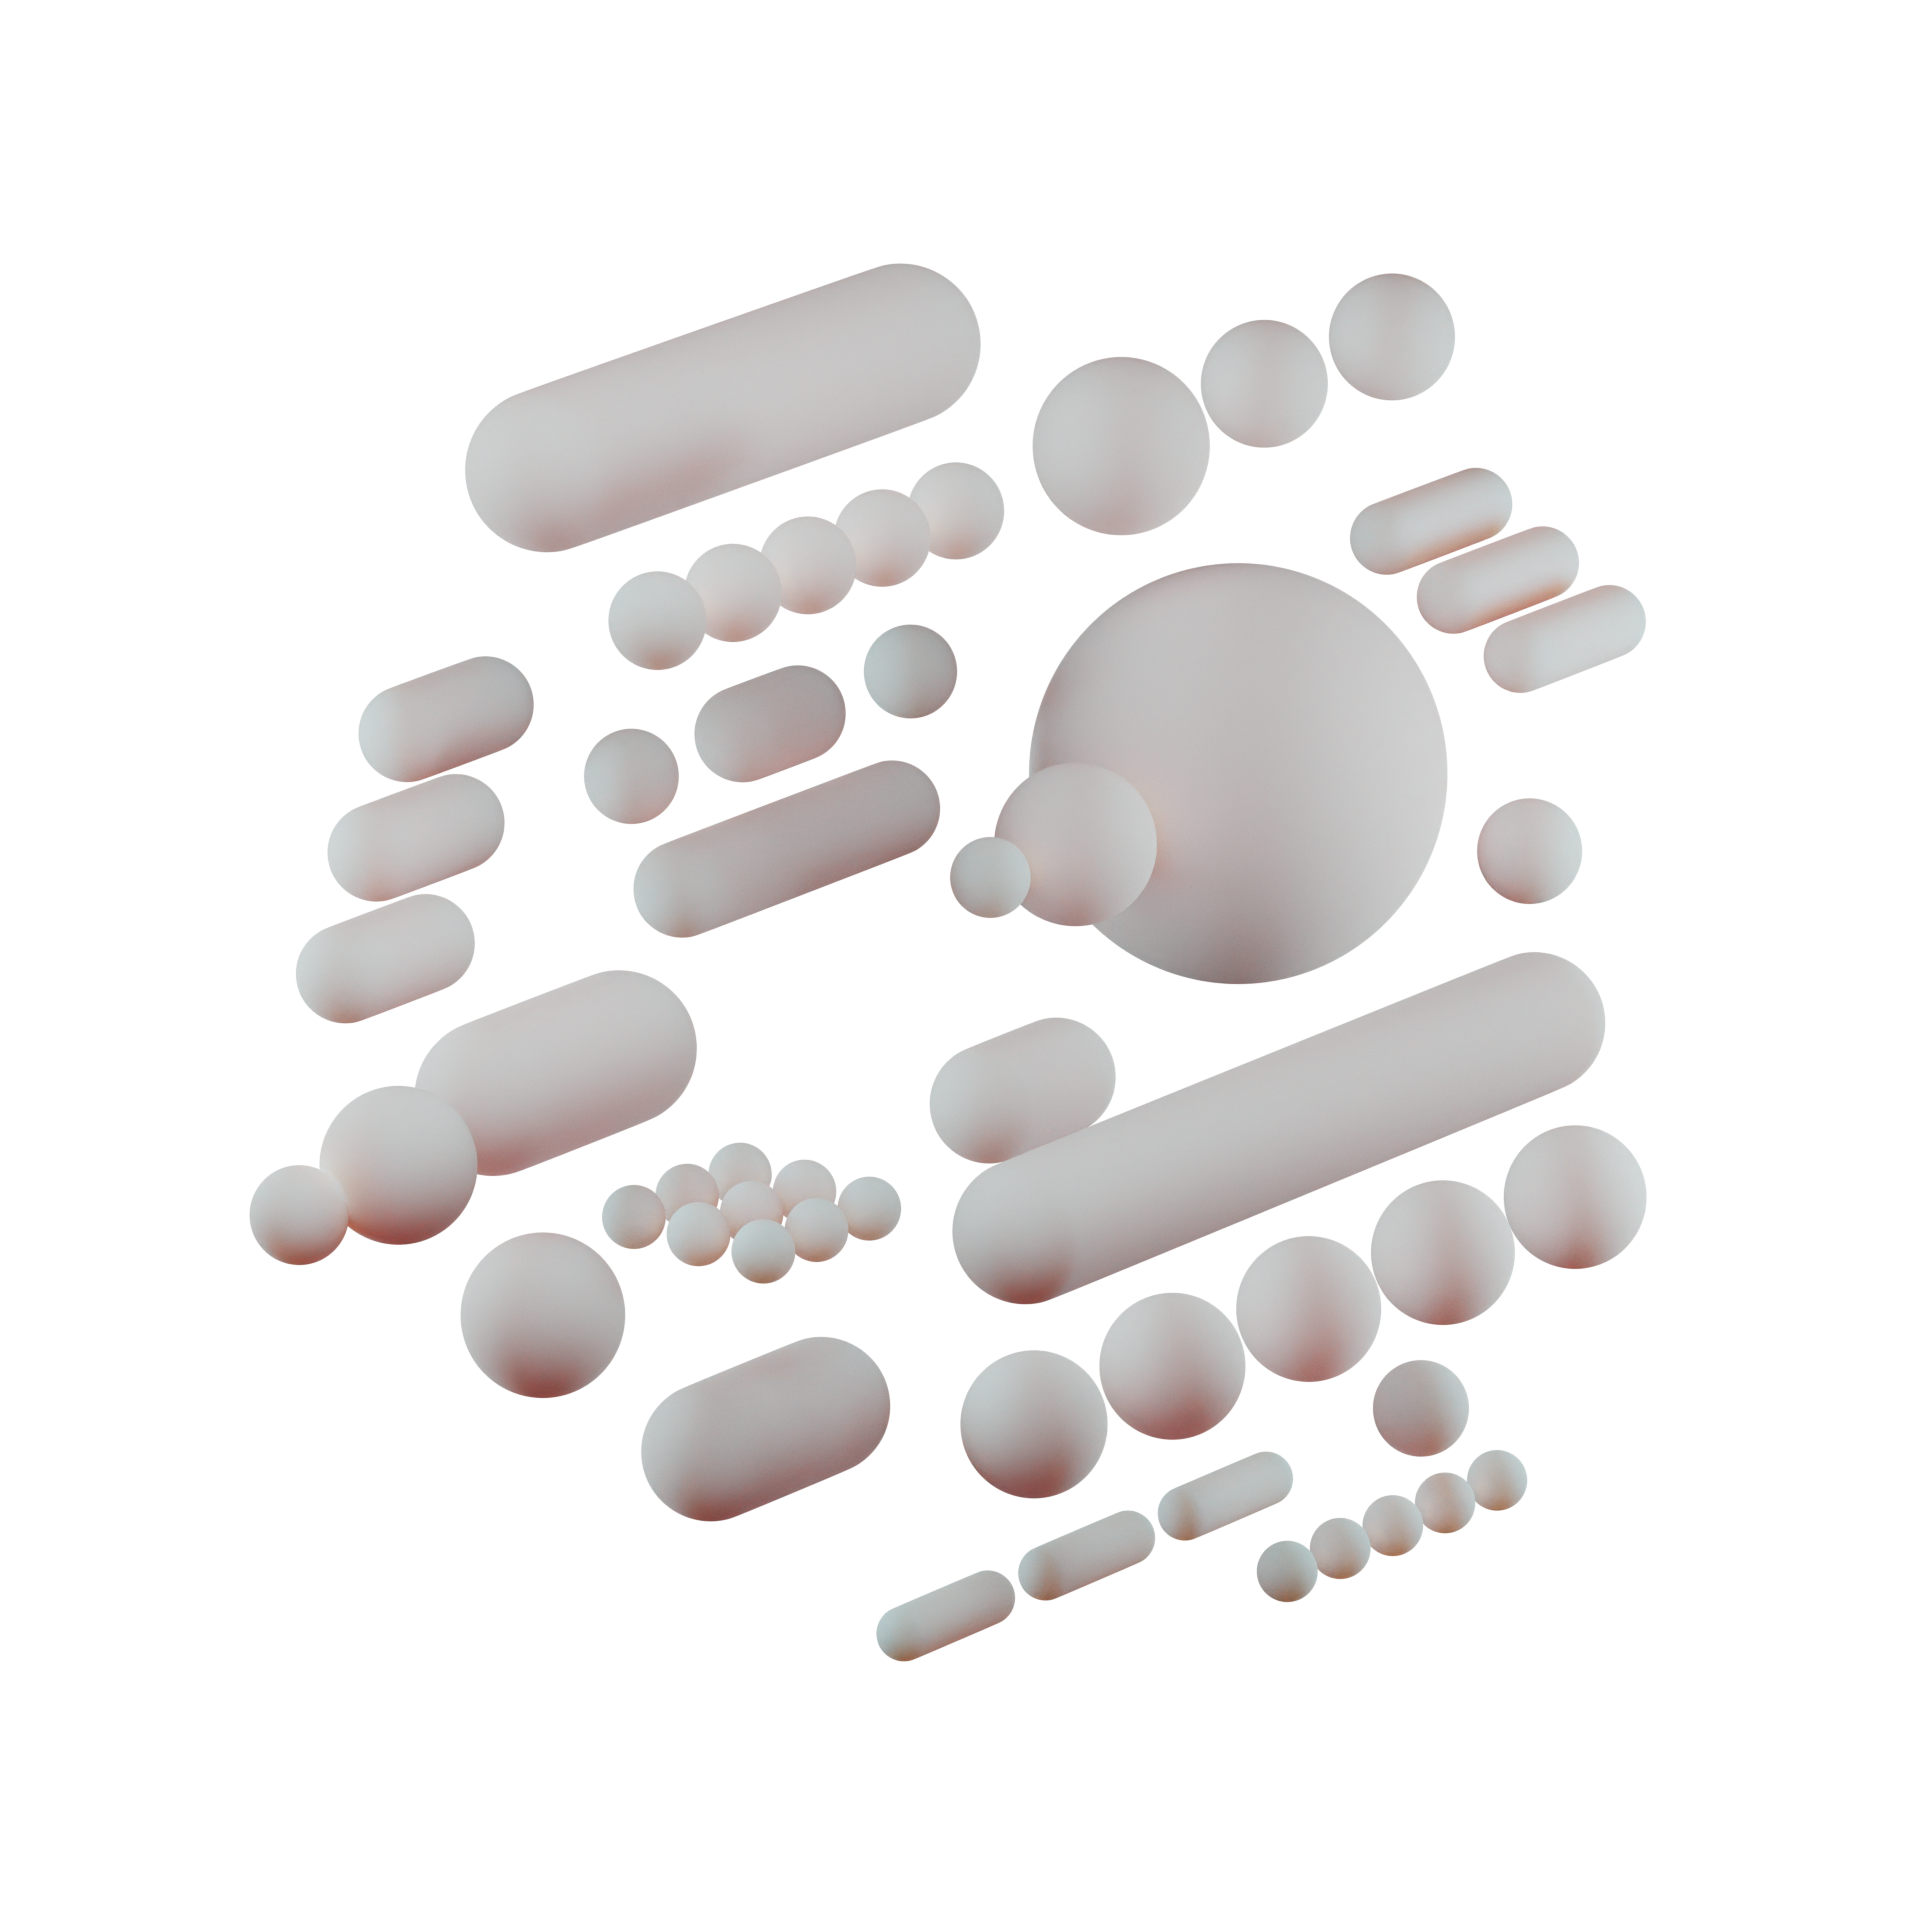 Bubbly 3D illustration